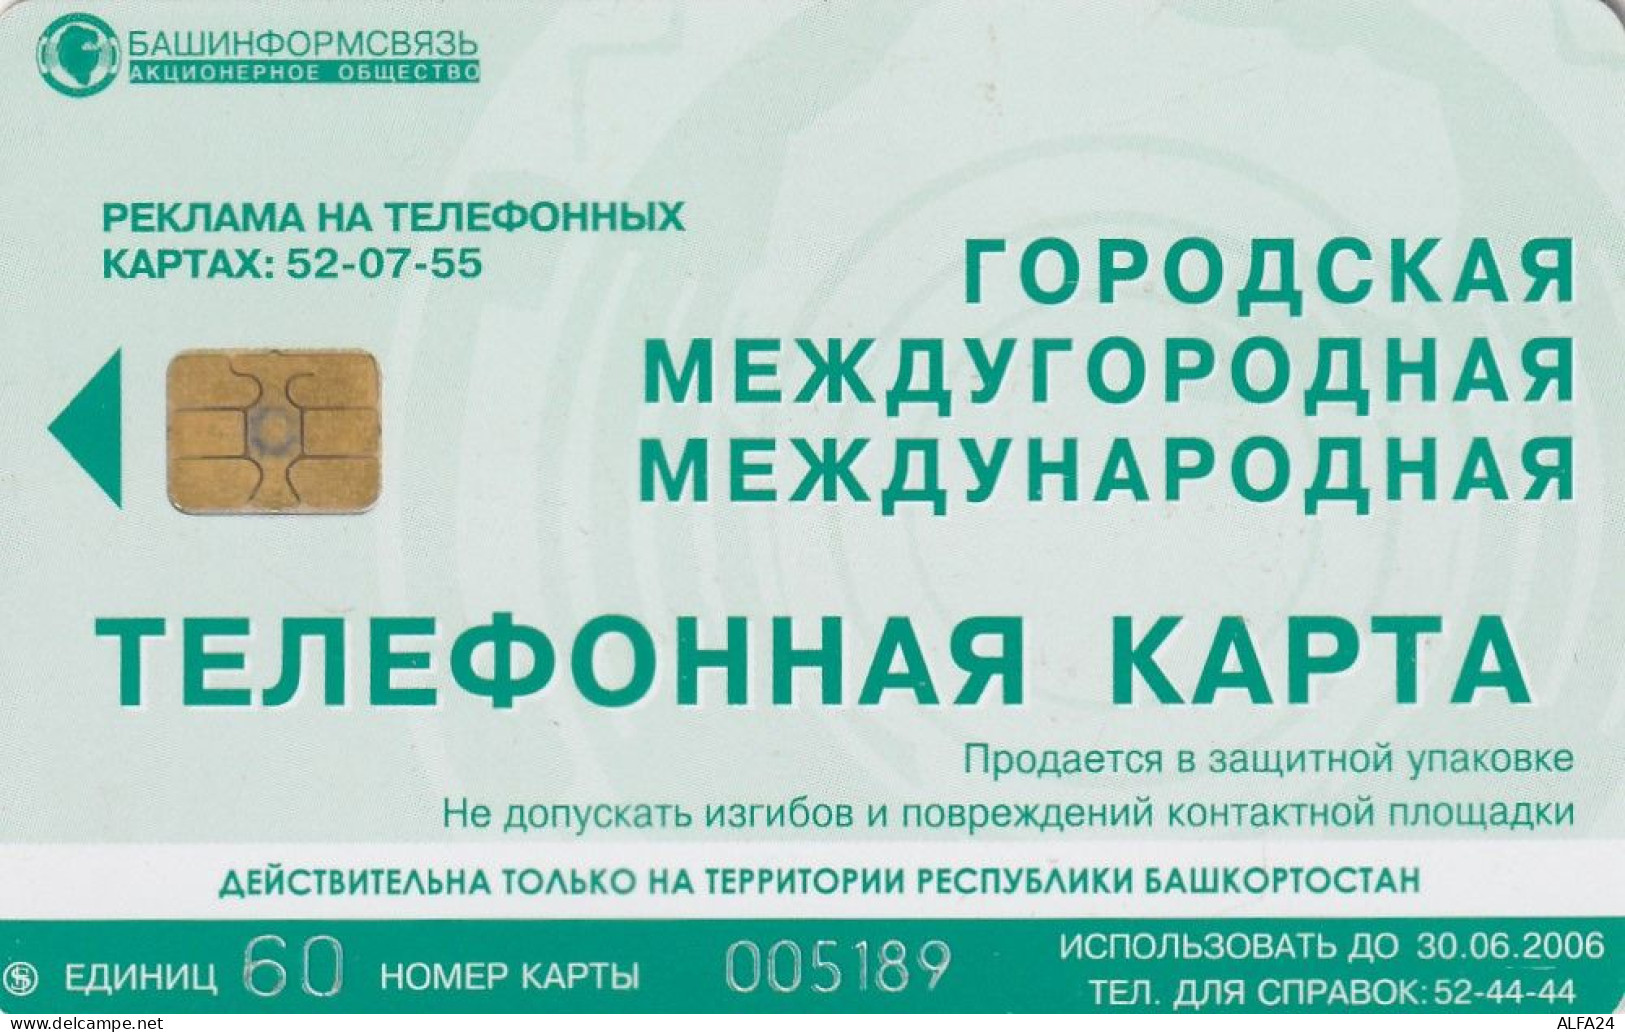 PHONE CARD RUSSIA Bashinformsvyaz - Ufa (E10.4.4 - Rusia